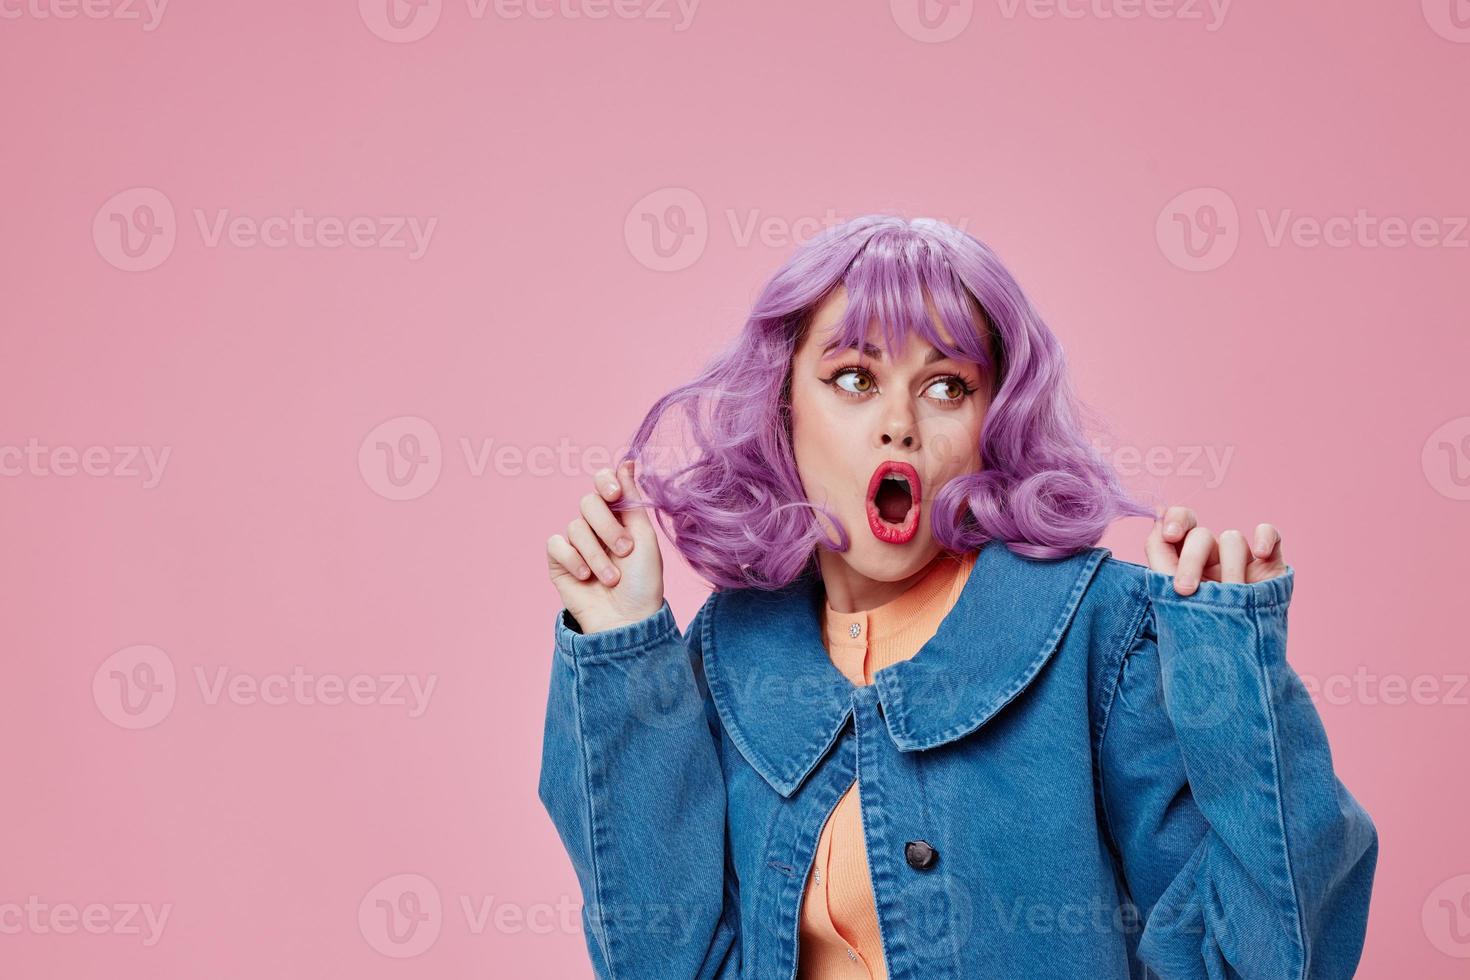 hermosa de moda niña ondulado púrpura pelo azul chaqueta emociones divertido estudio modelo inalterado foto